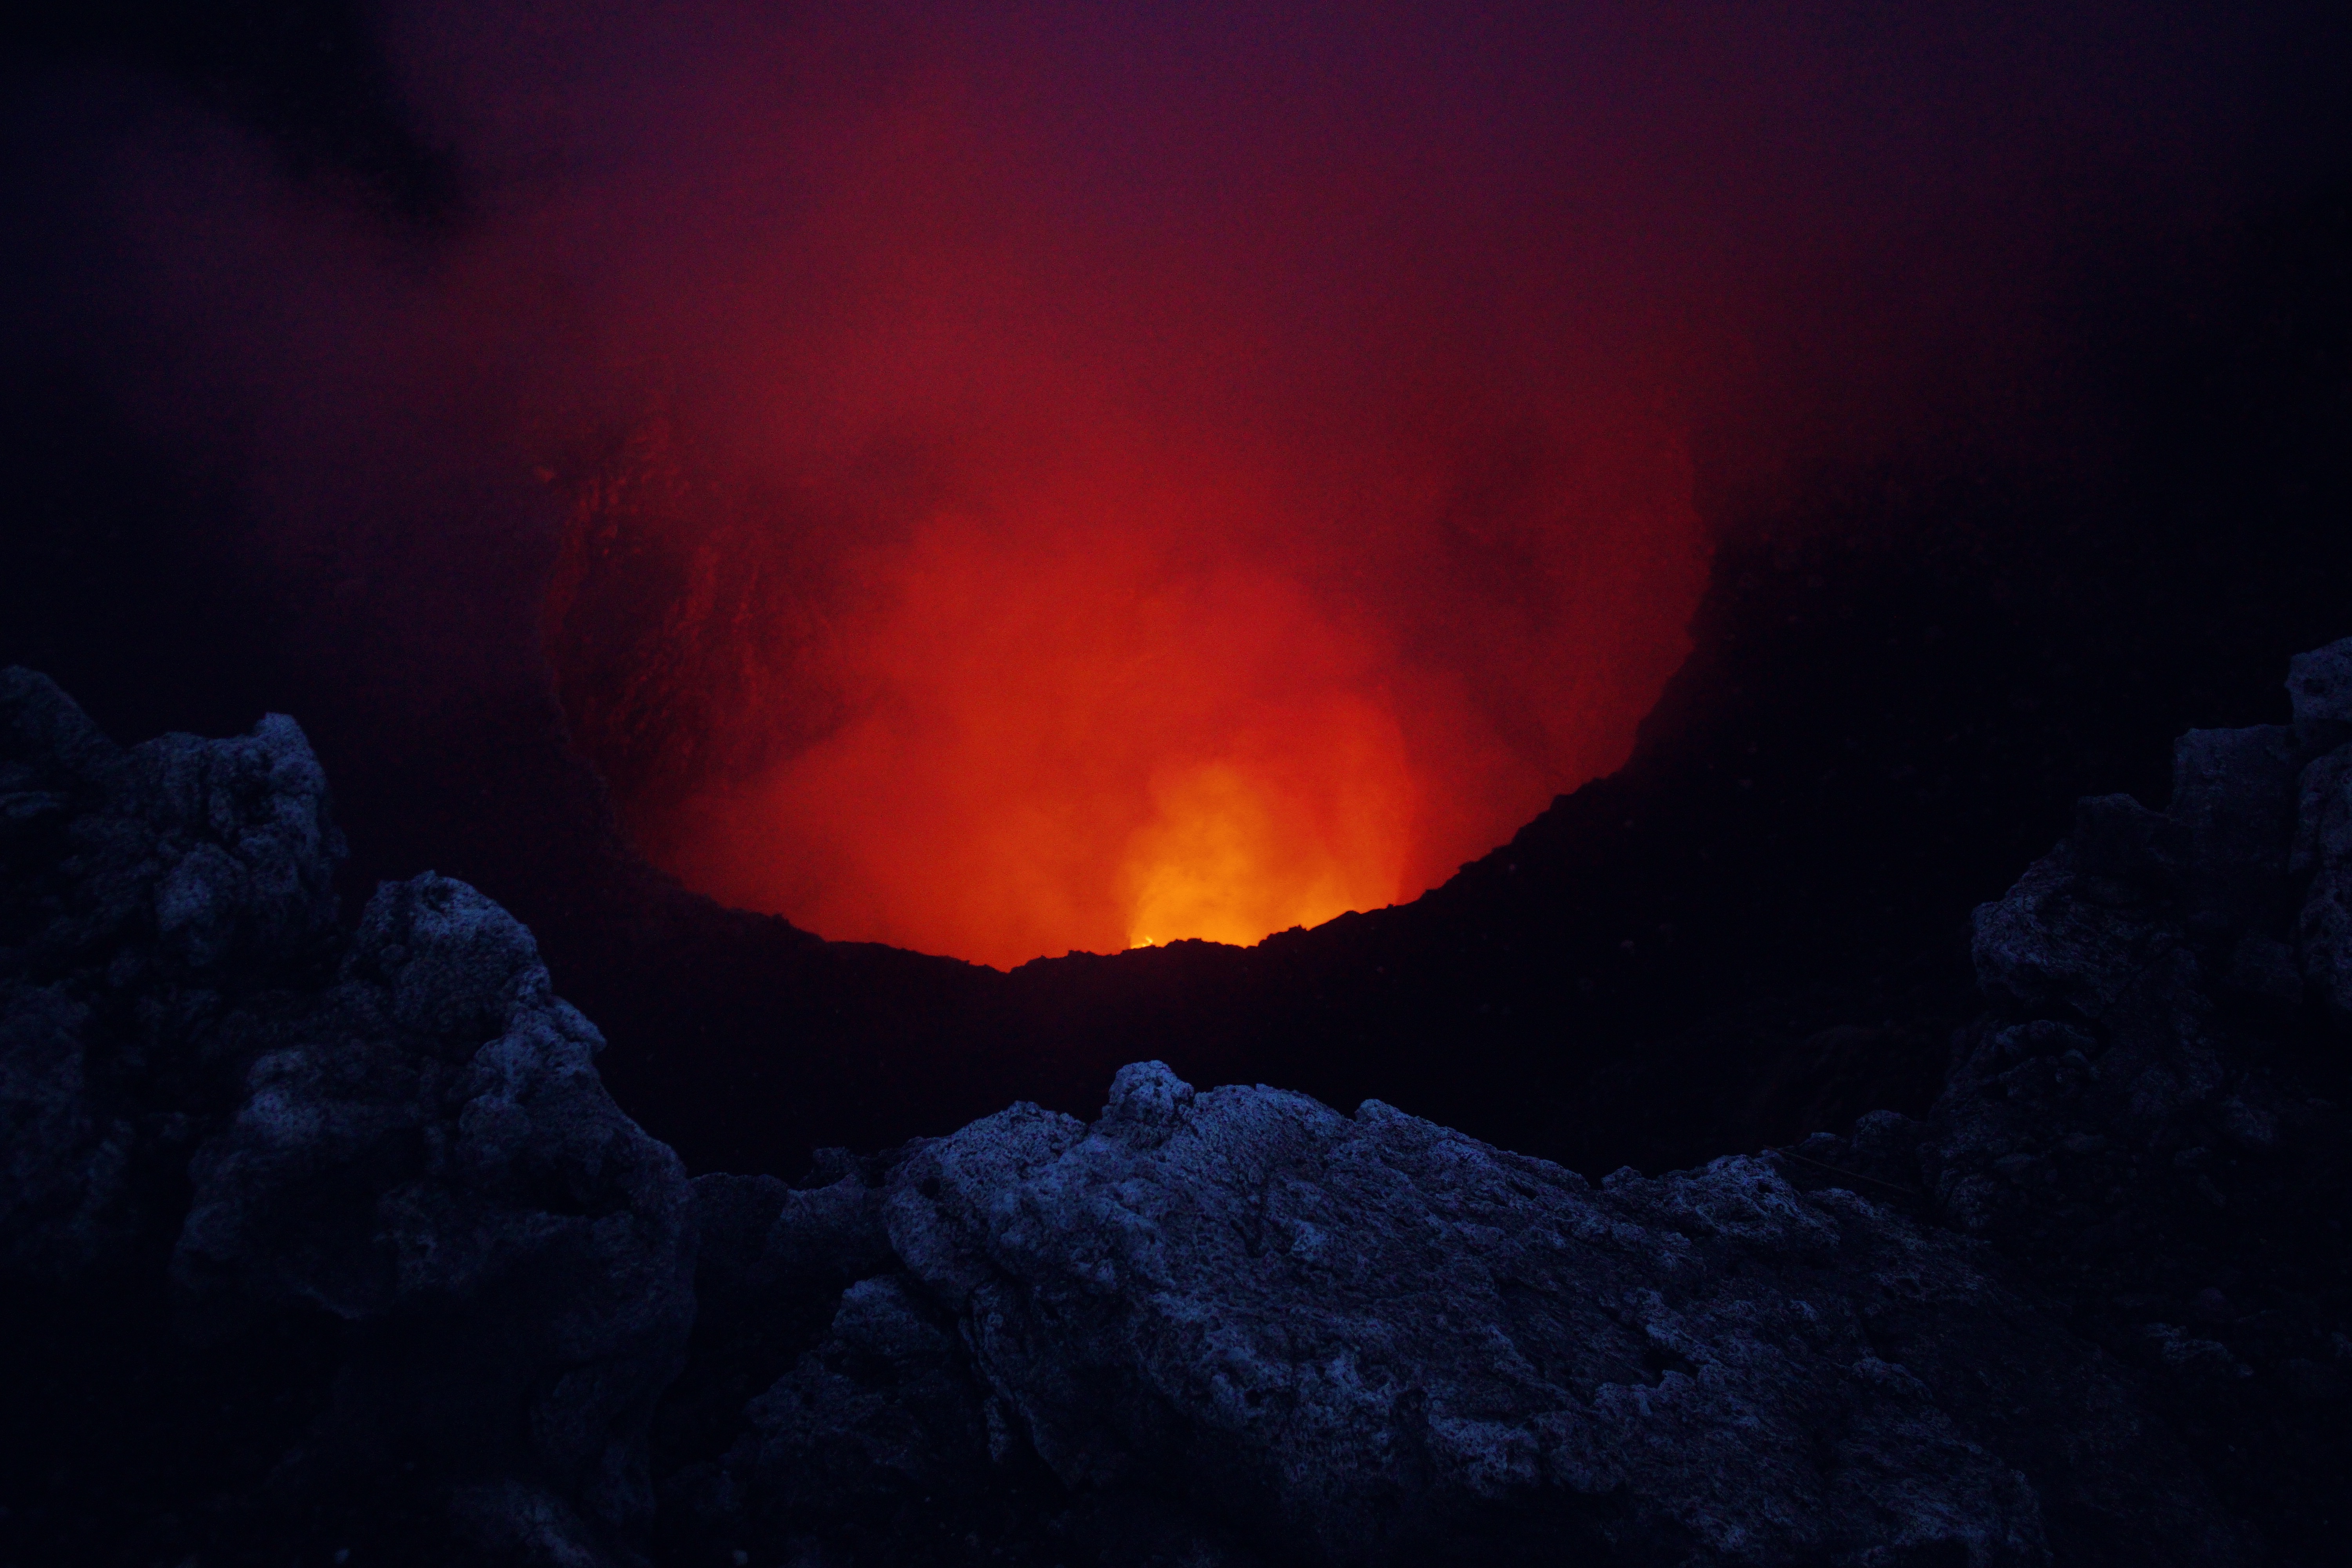 51611 Bild herunterladen natur, masaya, vulkan, nicaragua, lava - Hintergrundbilder und Bildschirmschoner kostenlos